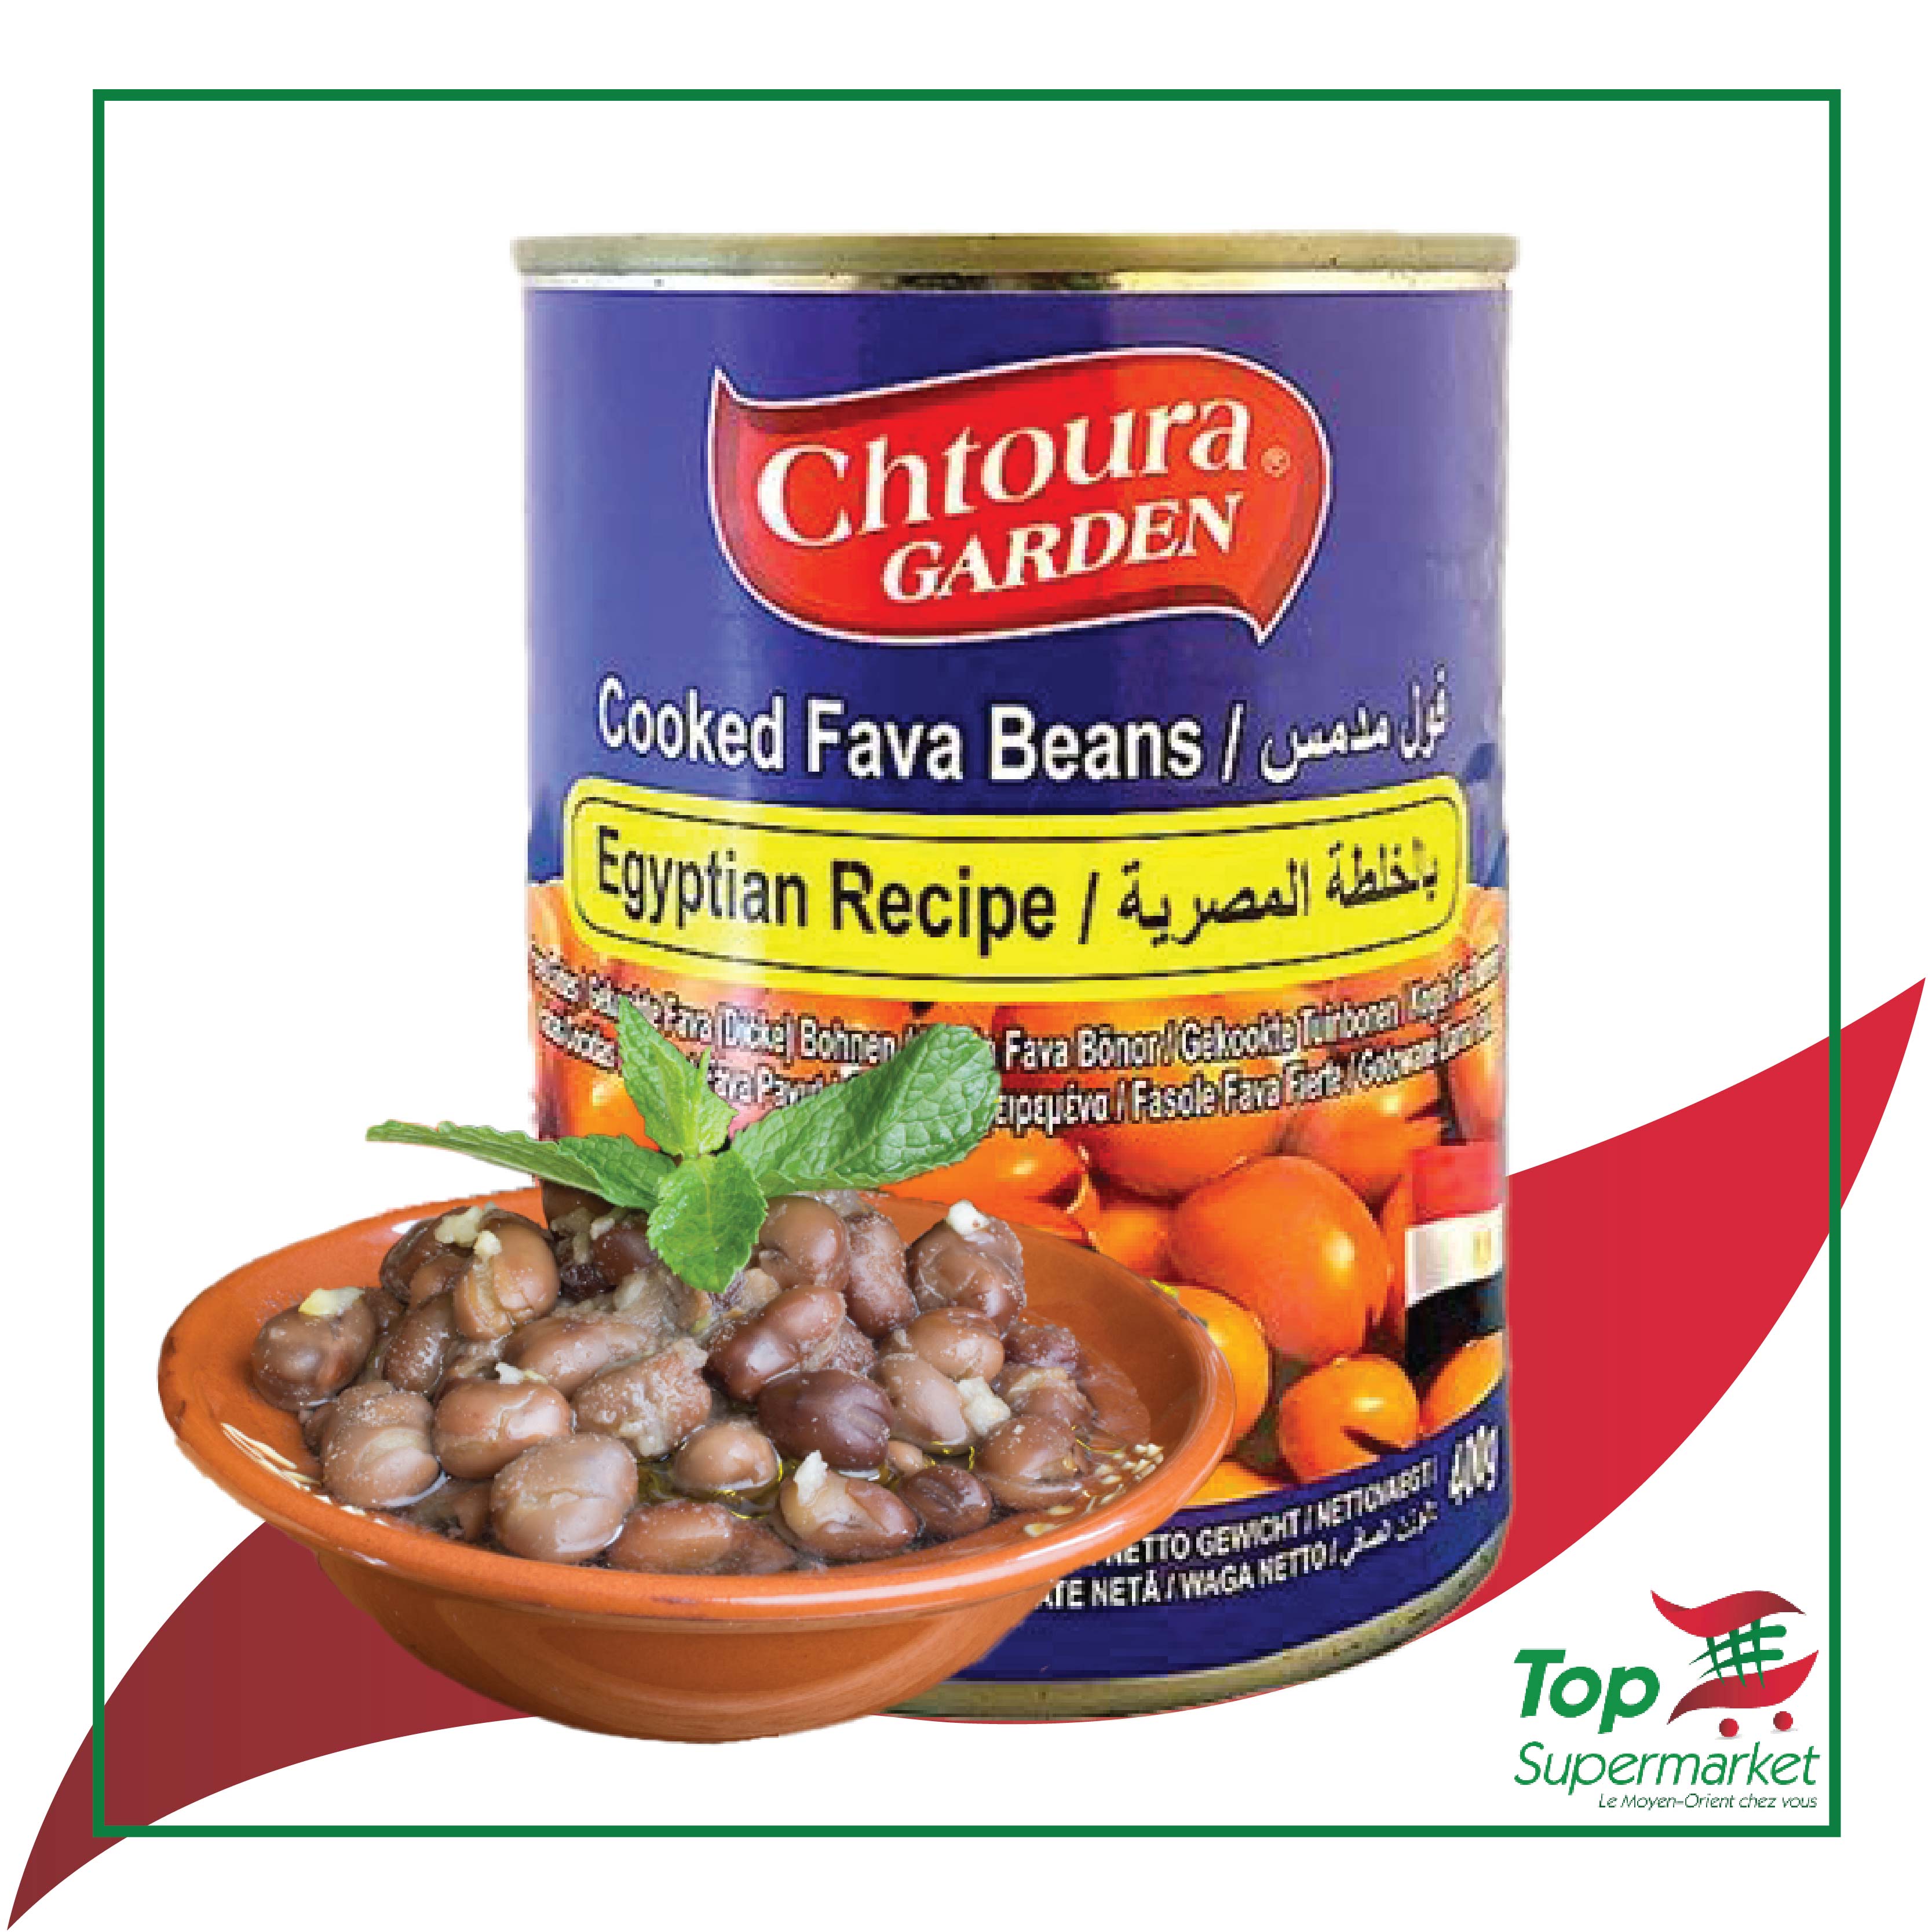 Chtoura Garden Fèves recette egyptienne 400gr